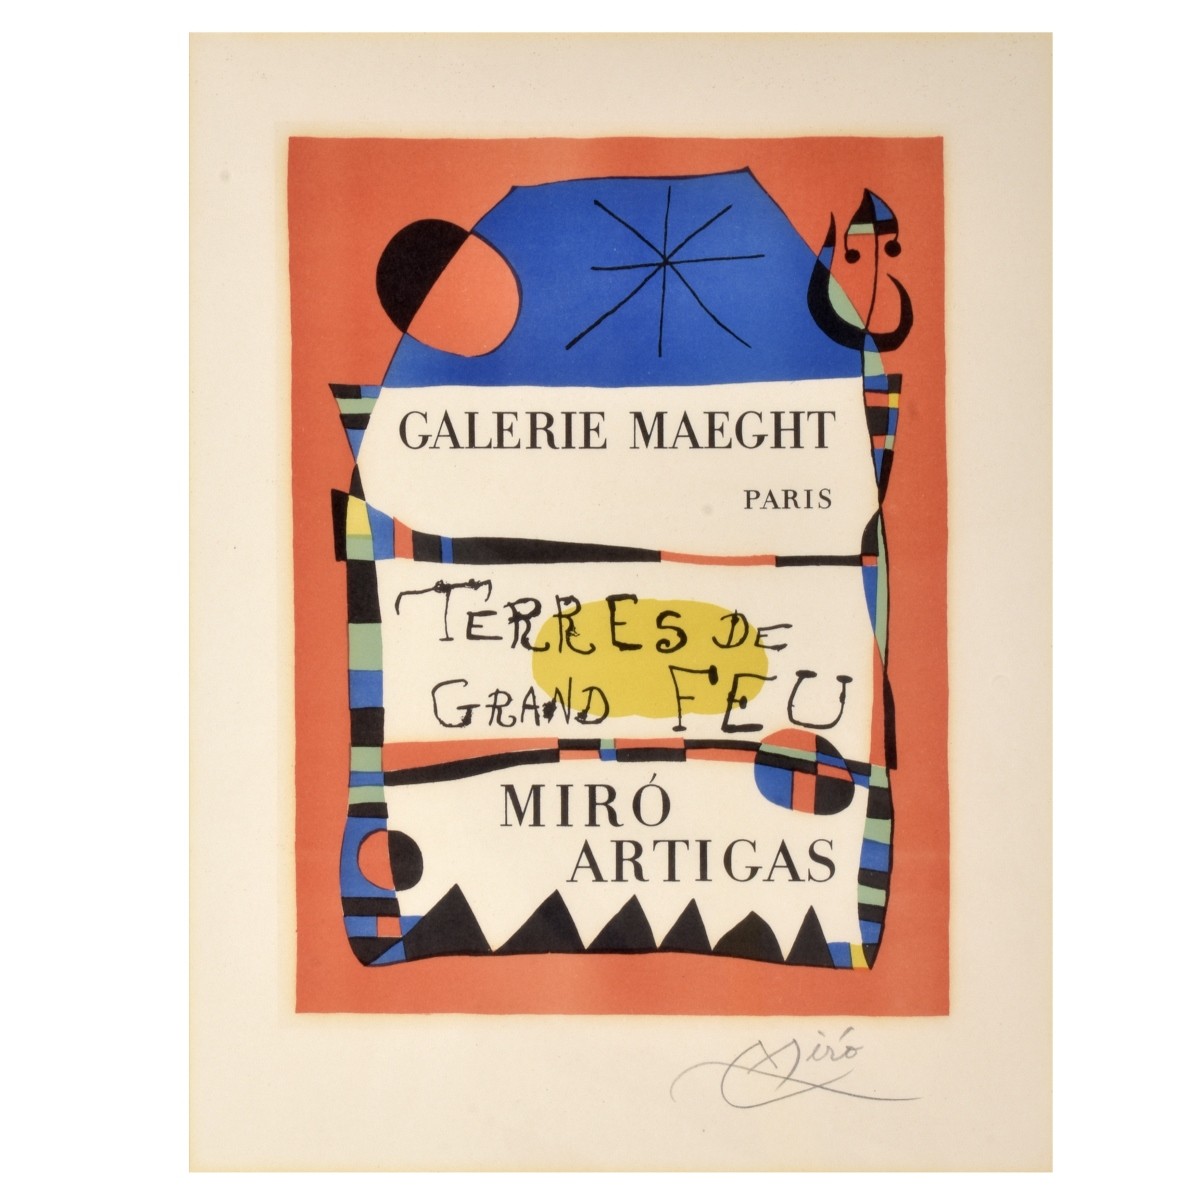 After: Joan Miro (1893 - 1983)